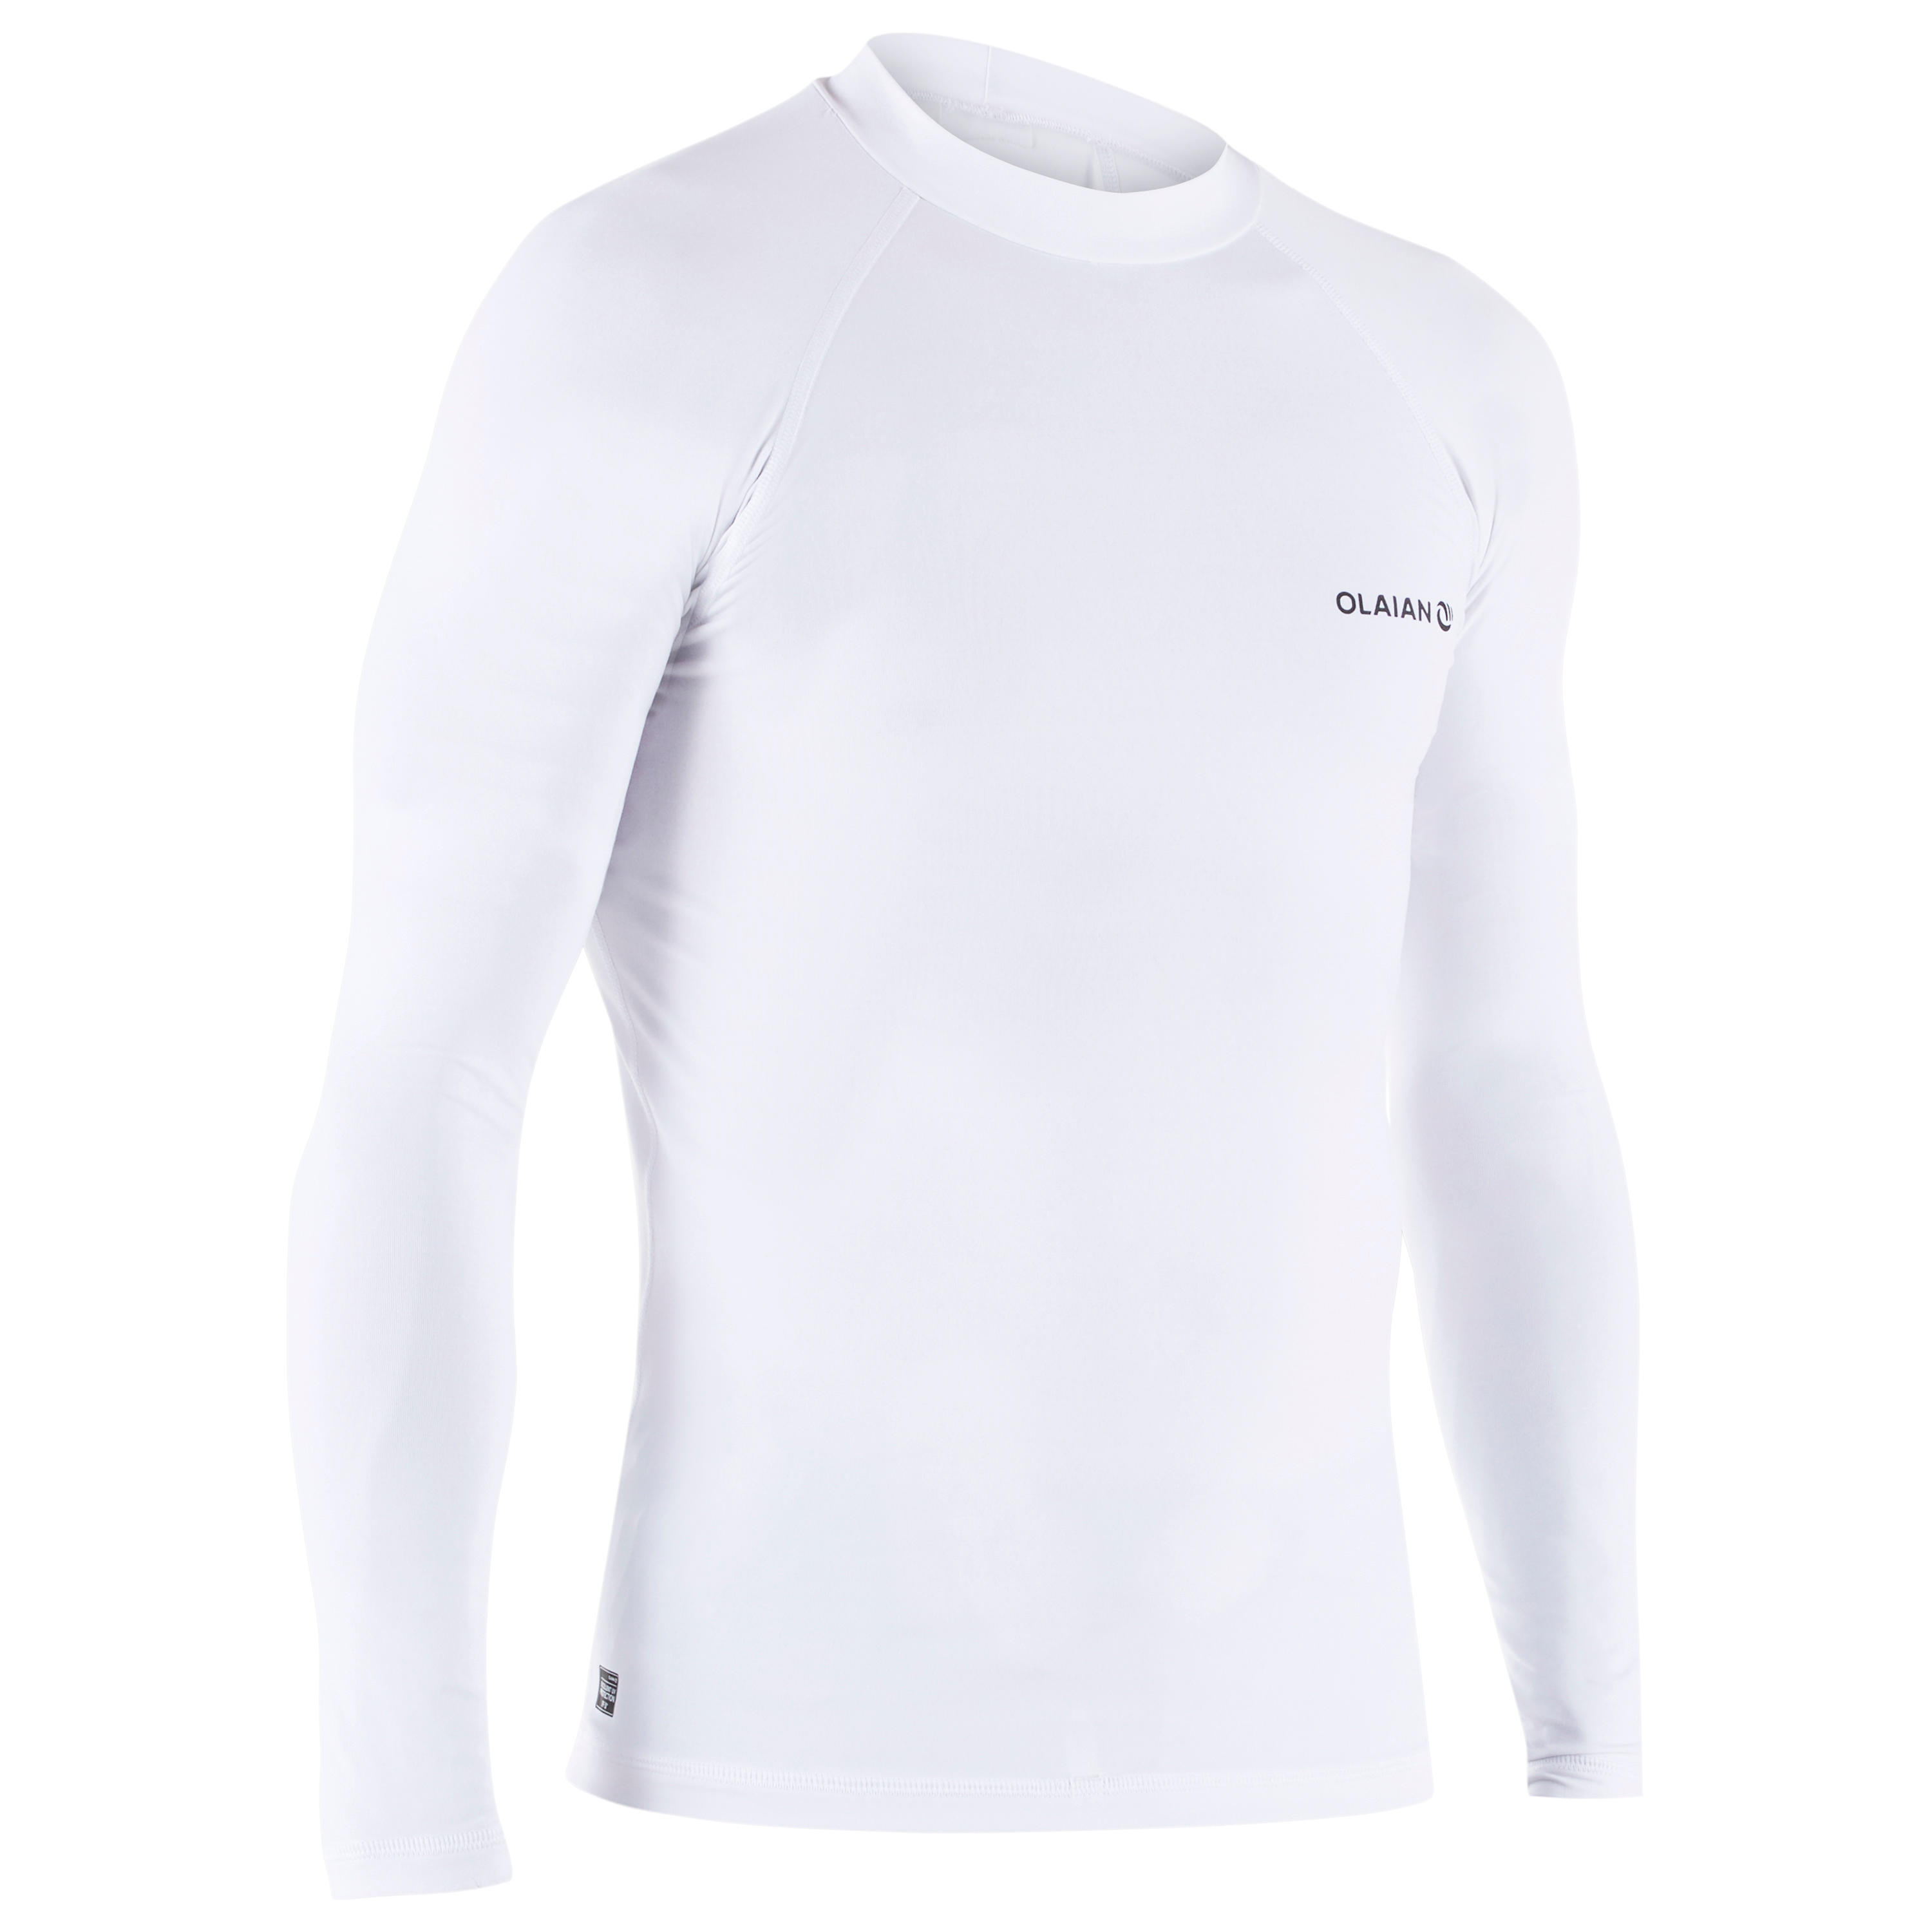 decathlon plain white t shirt